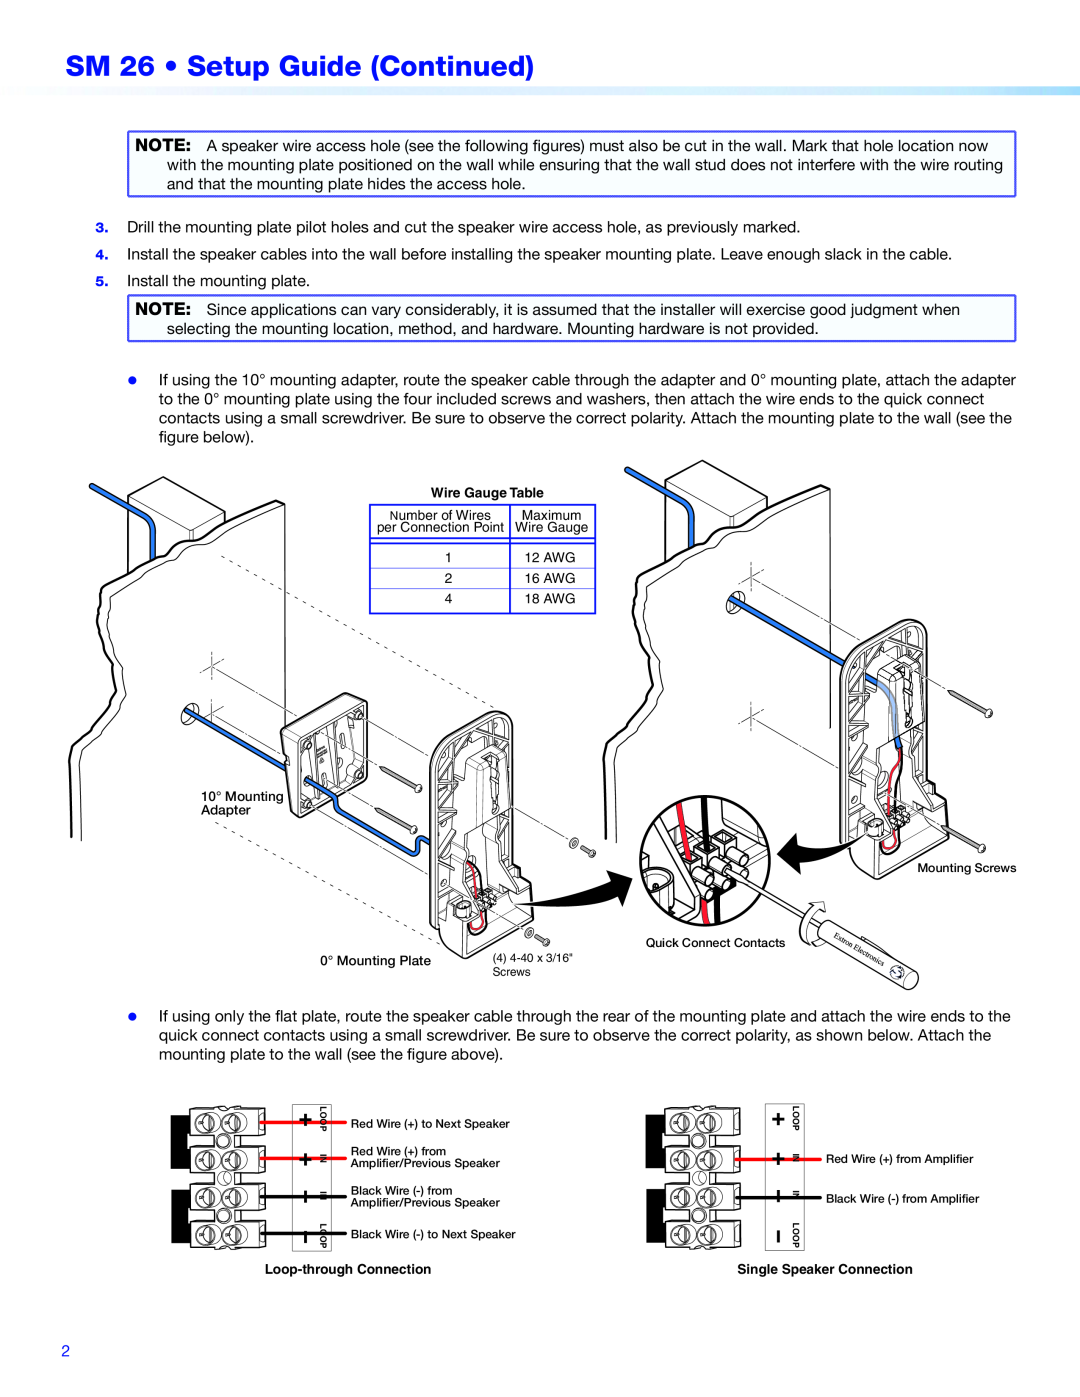 Extron electronic setup guide SM 26 Setup Guide Continued 